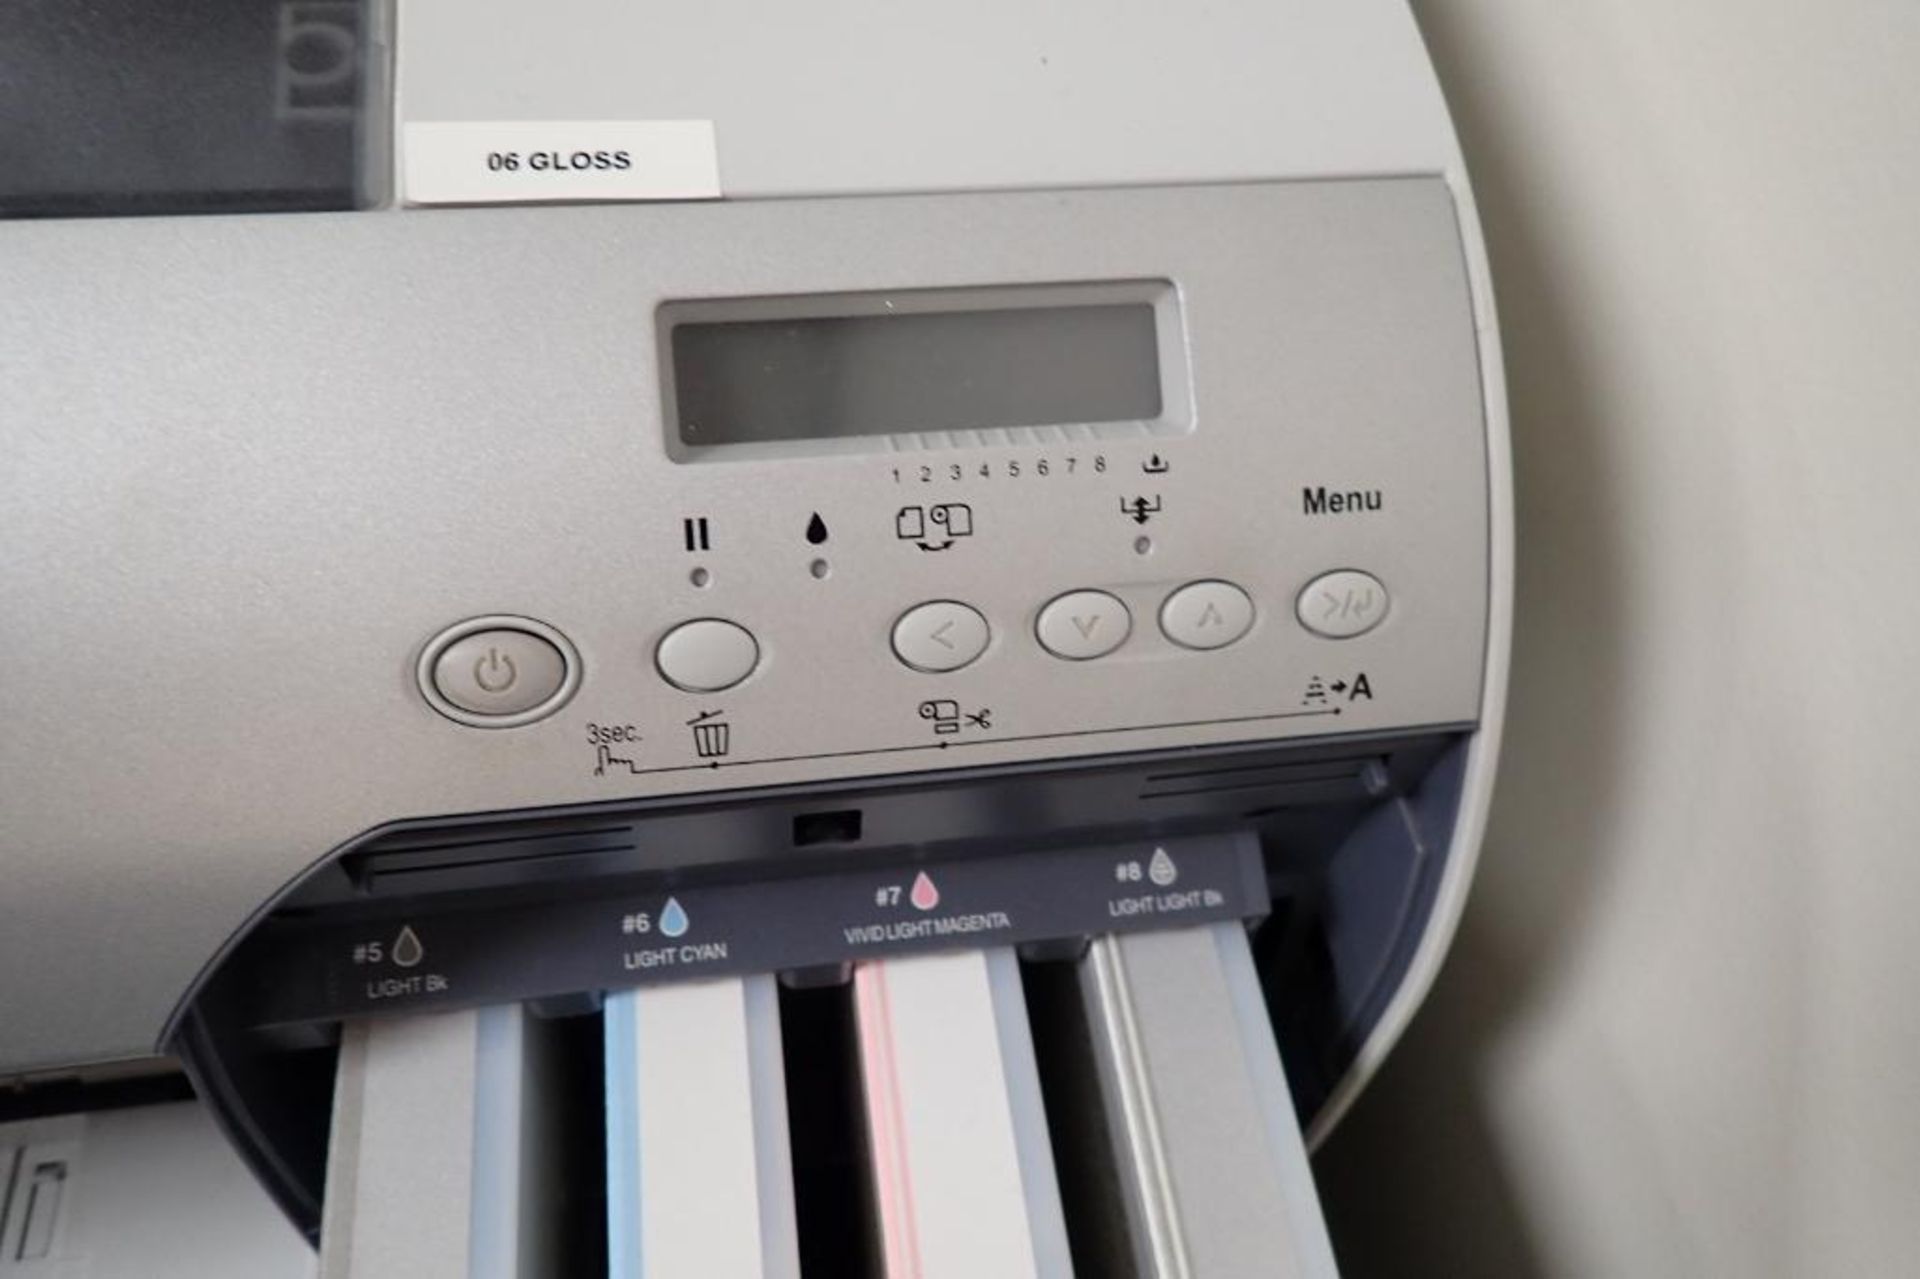 Epson stylus pro 4880 ink jet printer - Image 3 of 4